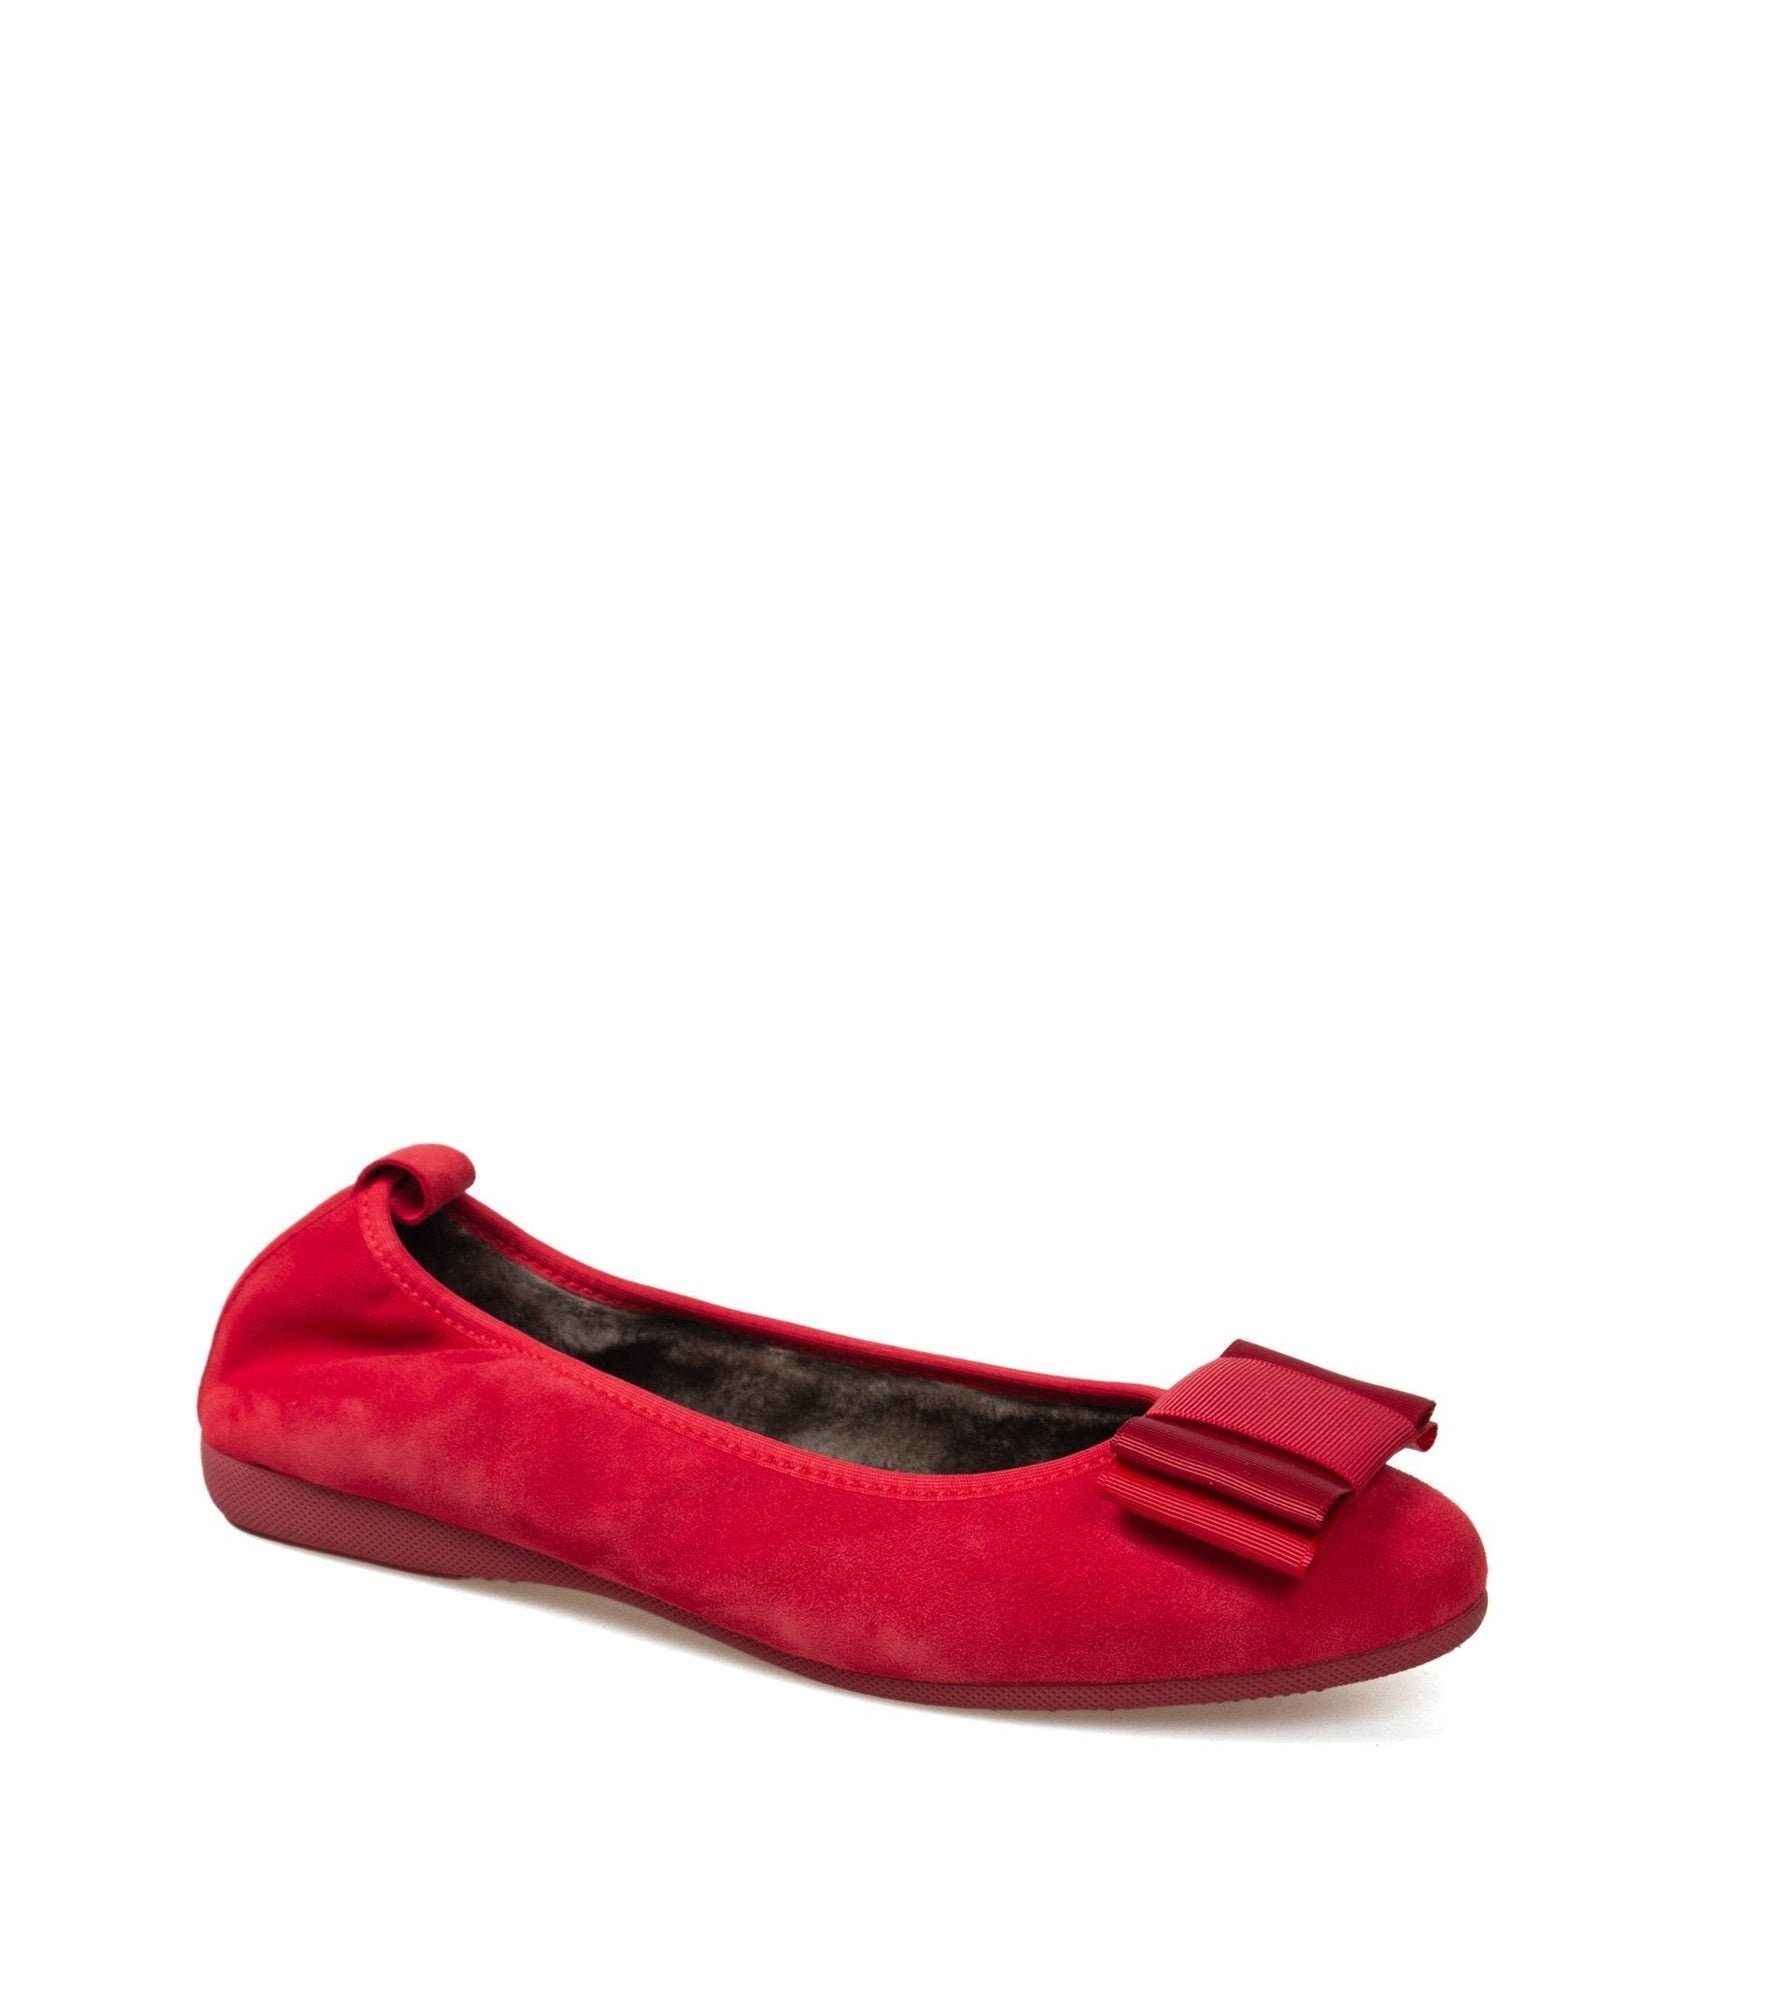 Roter Mädchen Ballerina online kaufen » Ballerina Schuhe | OTTO